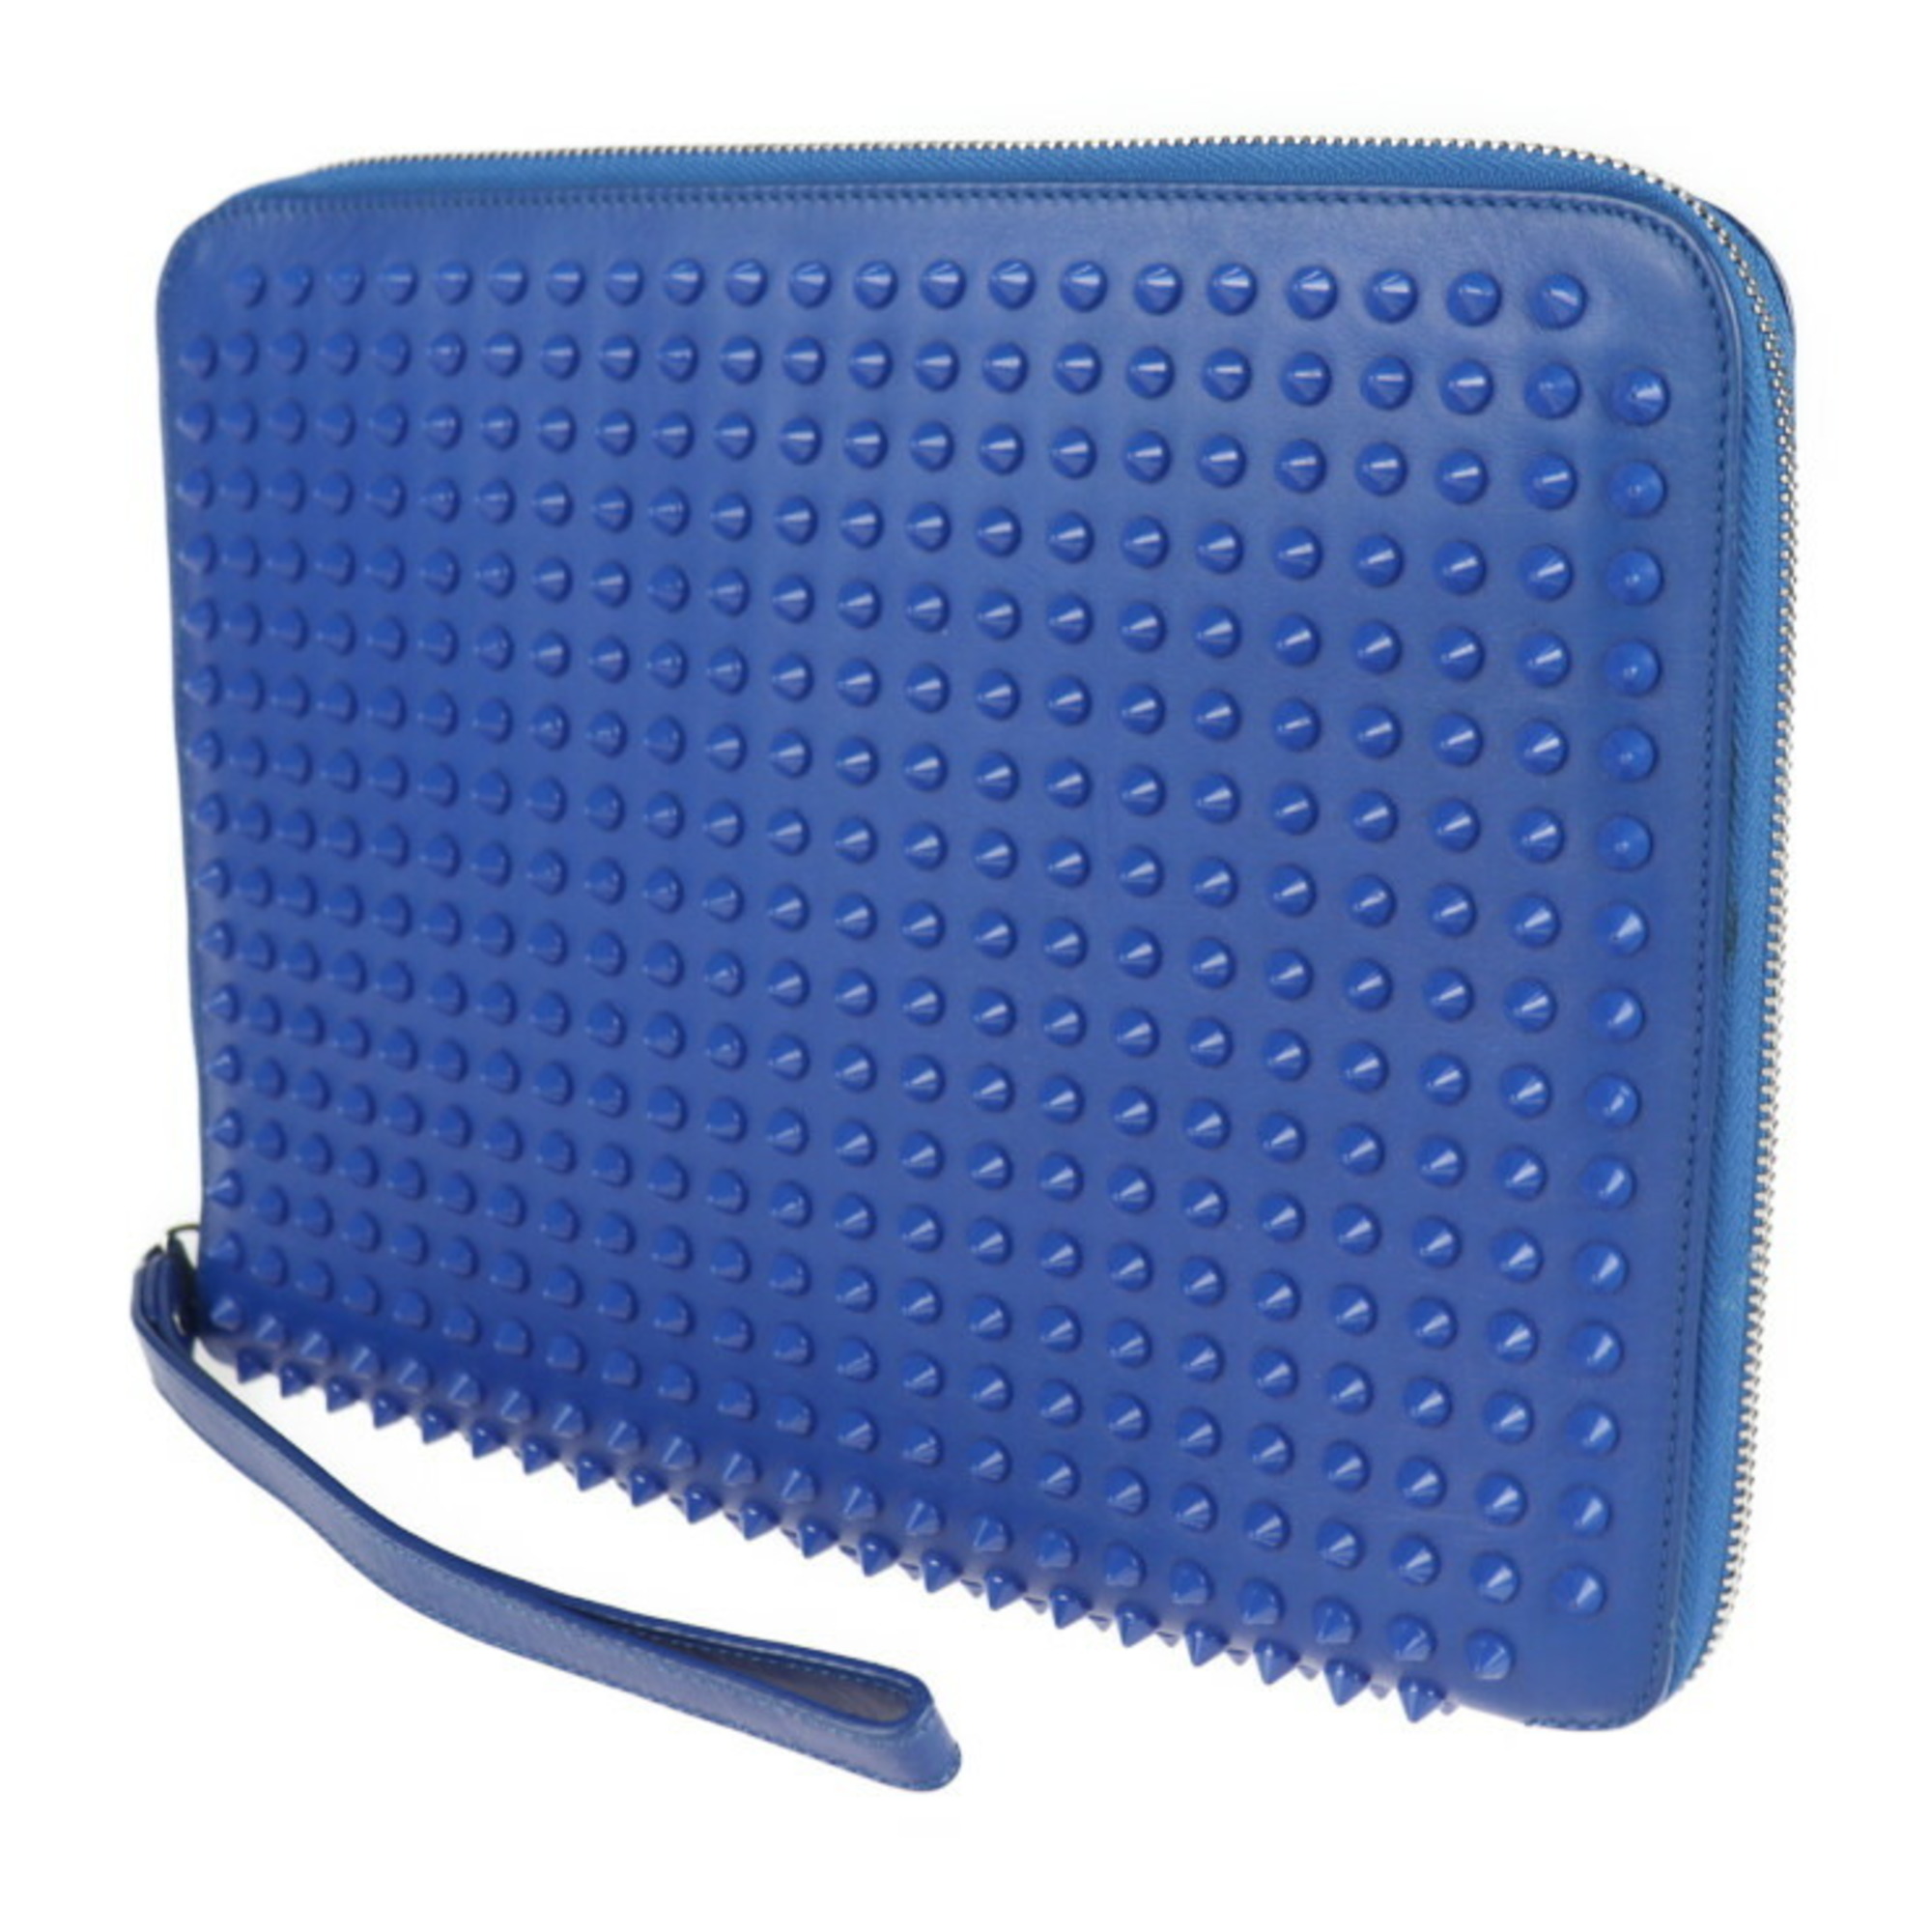 Christian Louboutin iPad Case Second Bag 3120247 Leather Blue Round Zipper Clutch Spike Studs